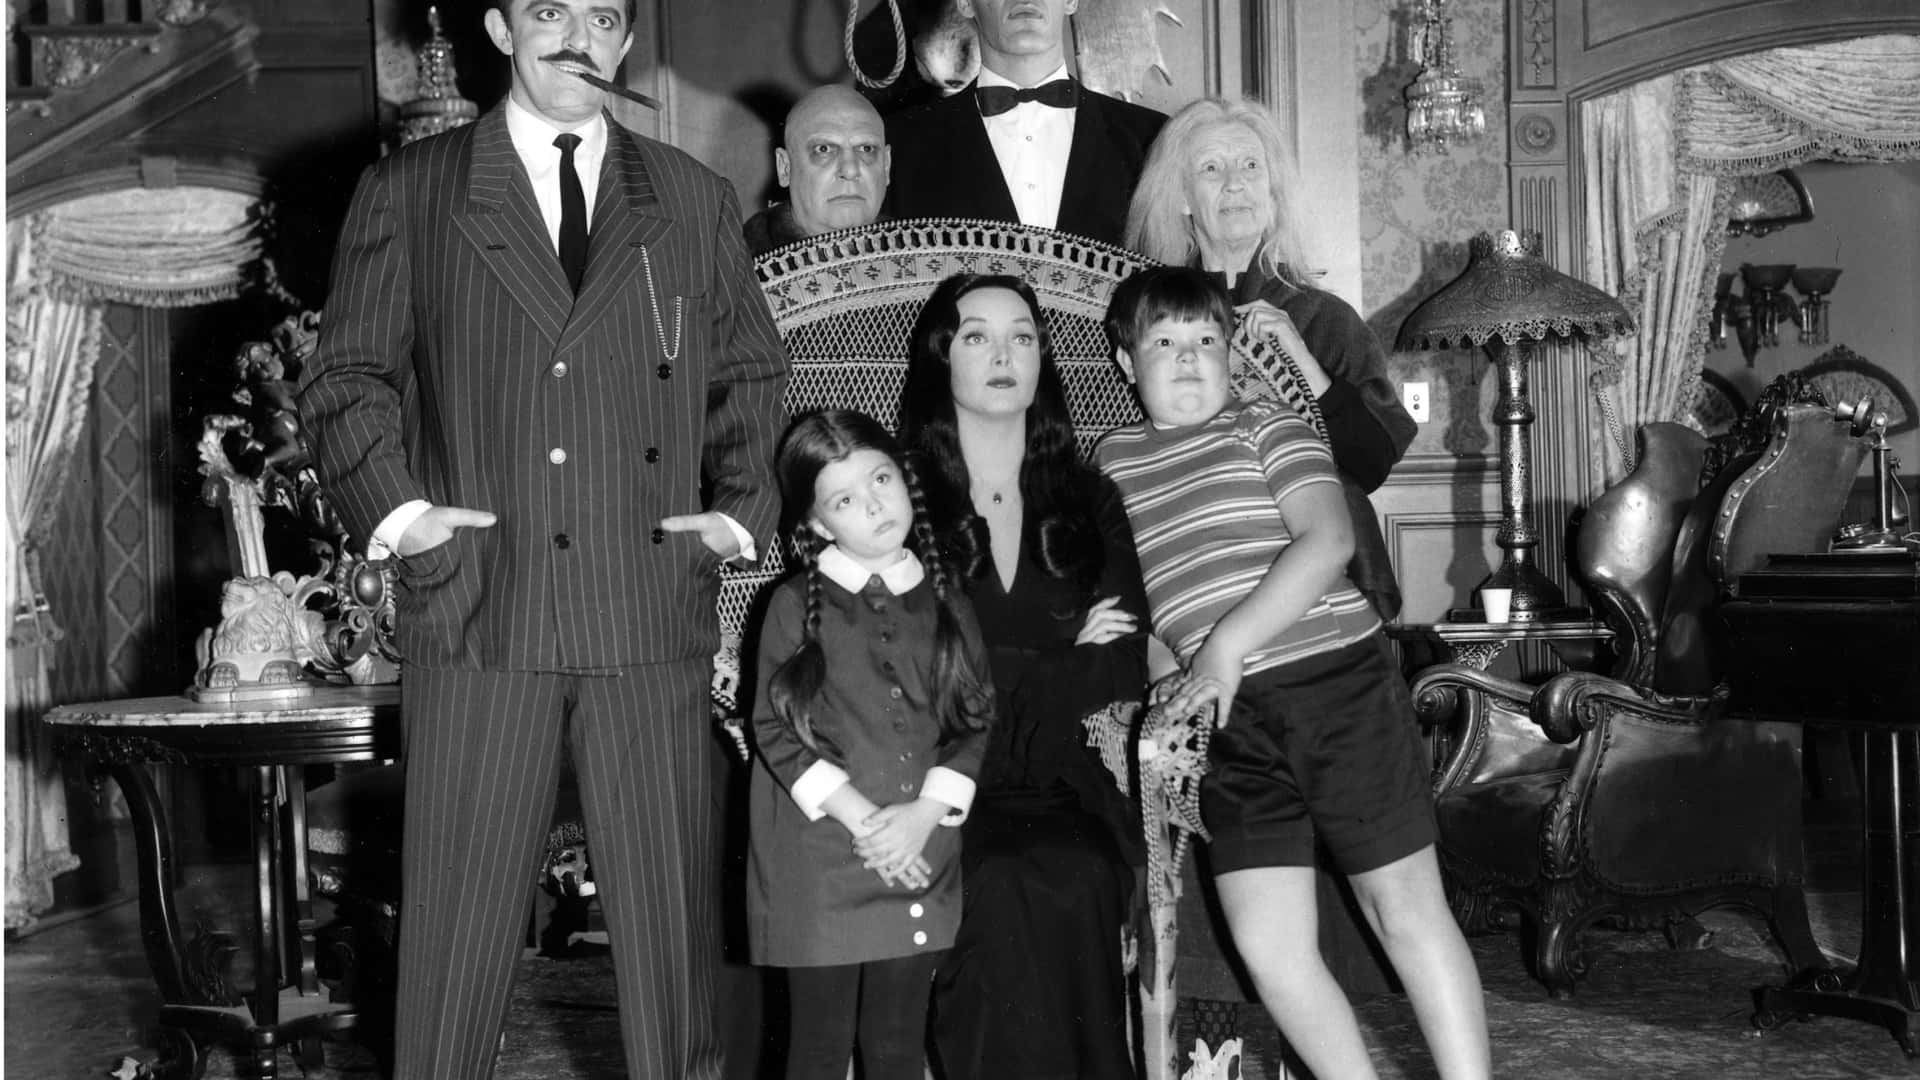 The Addams Family, the quaint, kooky and spooky family.